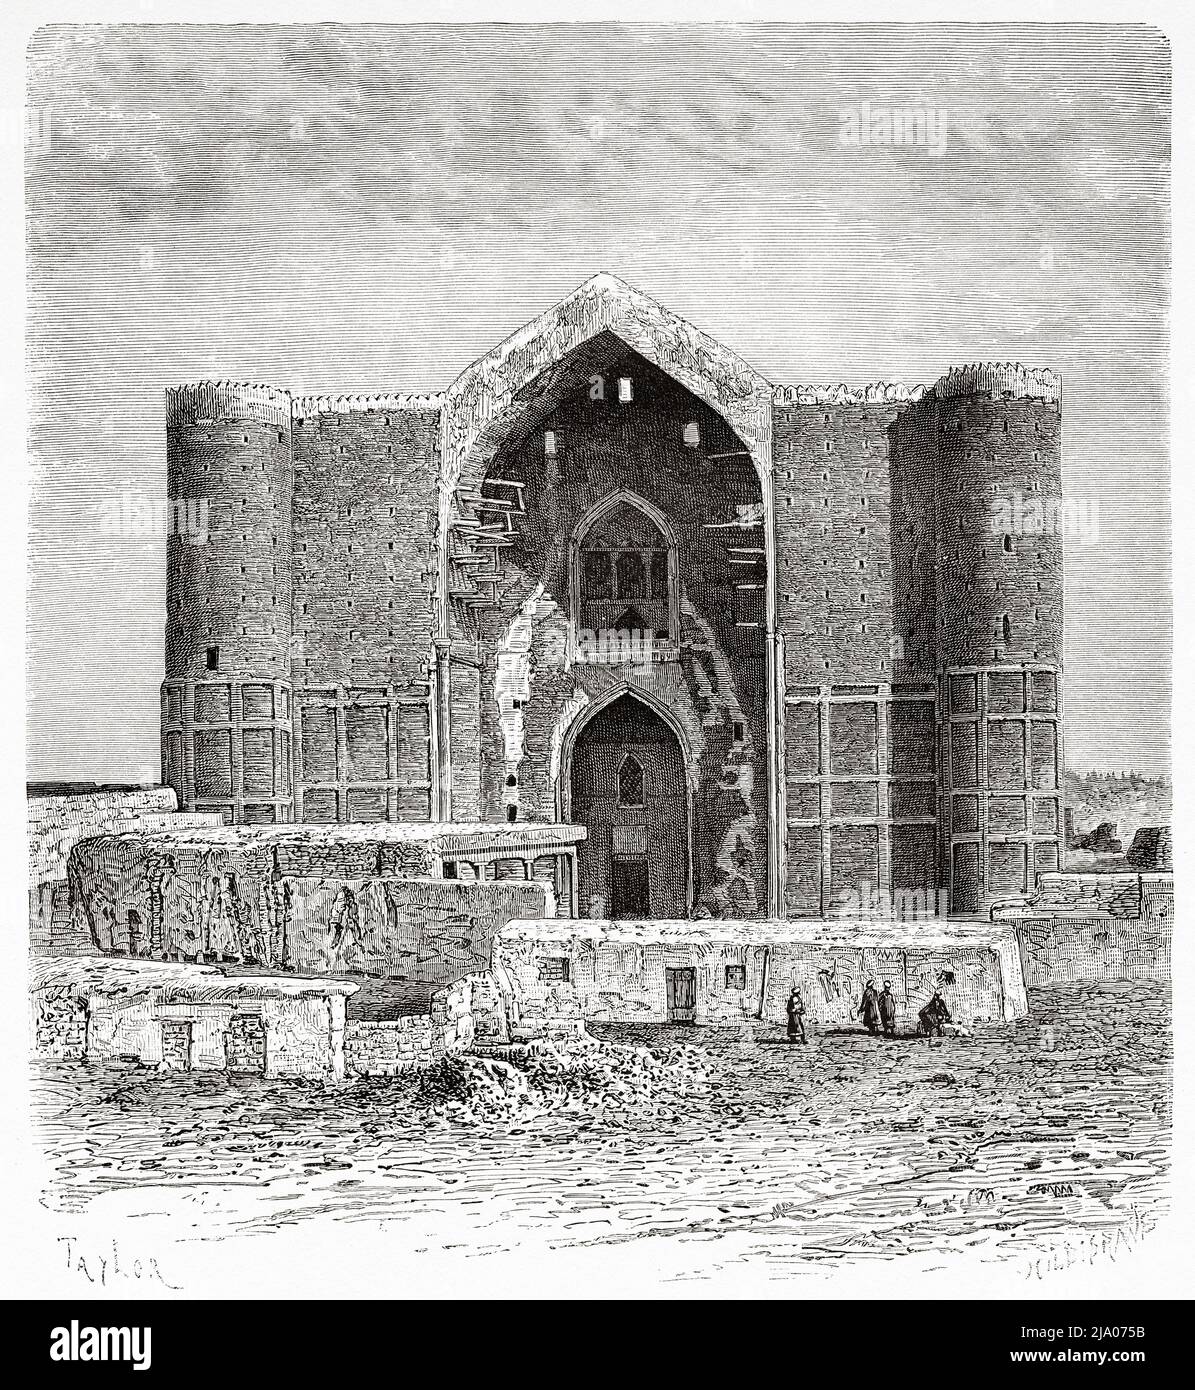 The Mausoleum Of Khoja Akhmet Yassaui, Turkestan, Republic of Kazakhstan, Central Asia. From Orenburg to Samarkand 1876-1878 by Madame Marie Ujfalvy-Bourdon, Le Tour du Monde 1879 Stock Photo